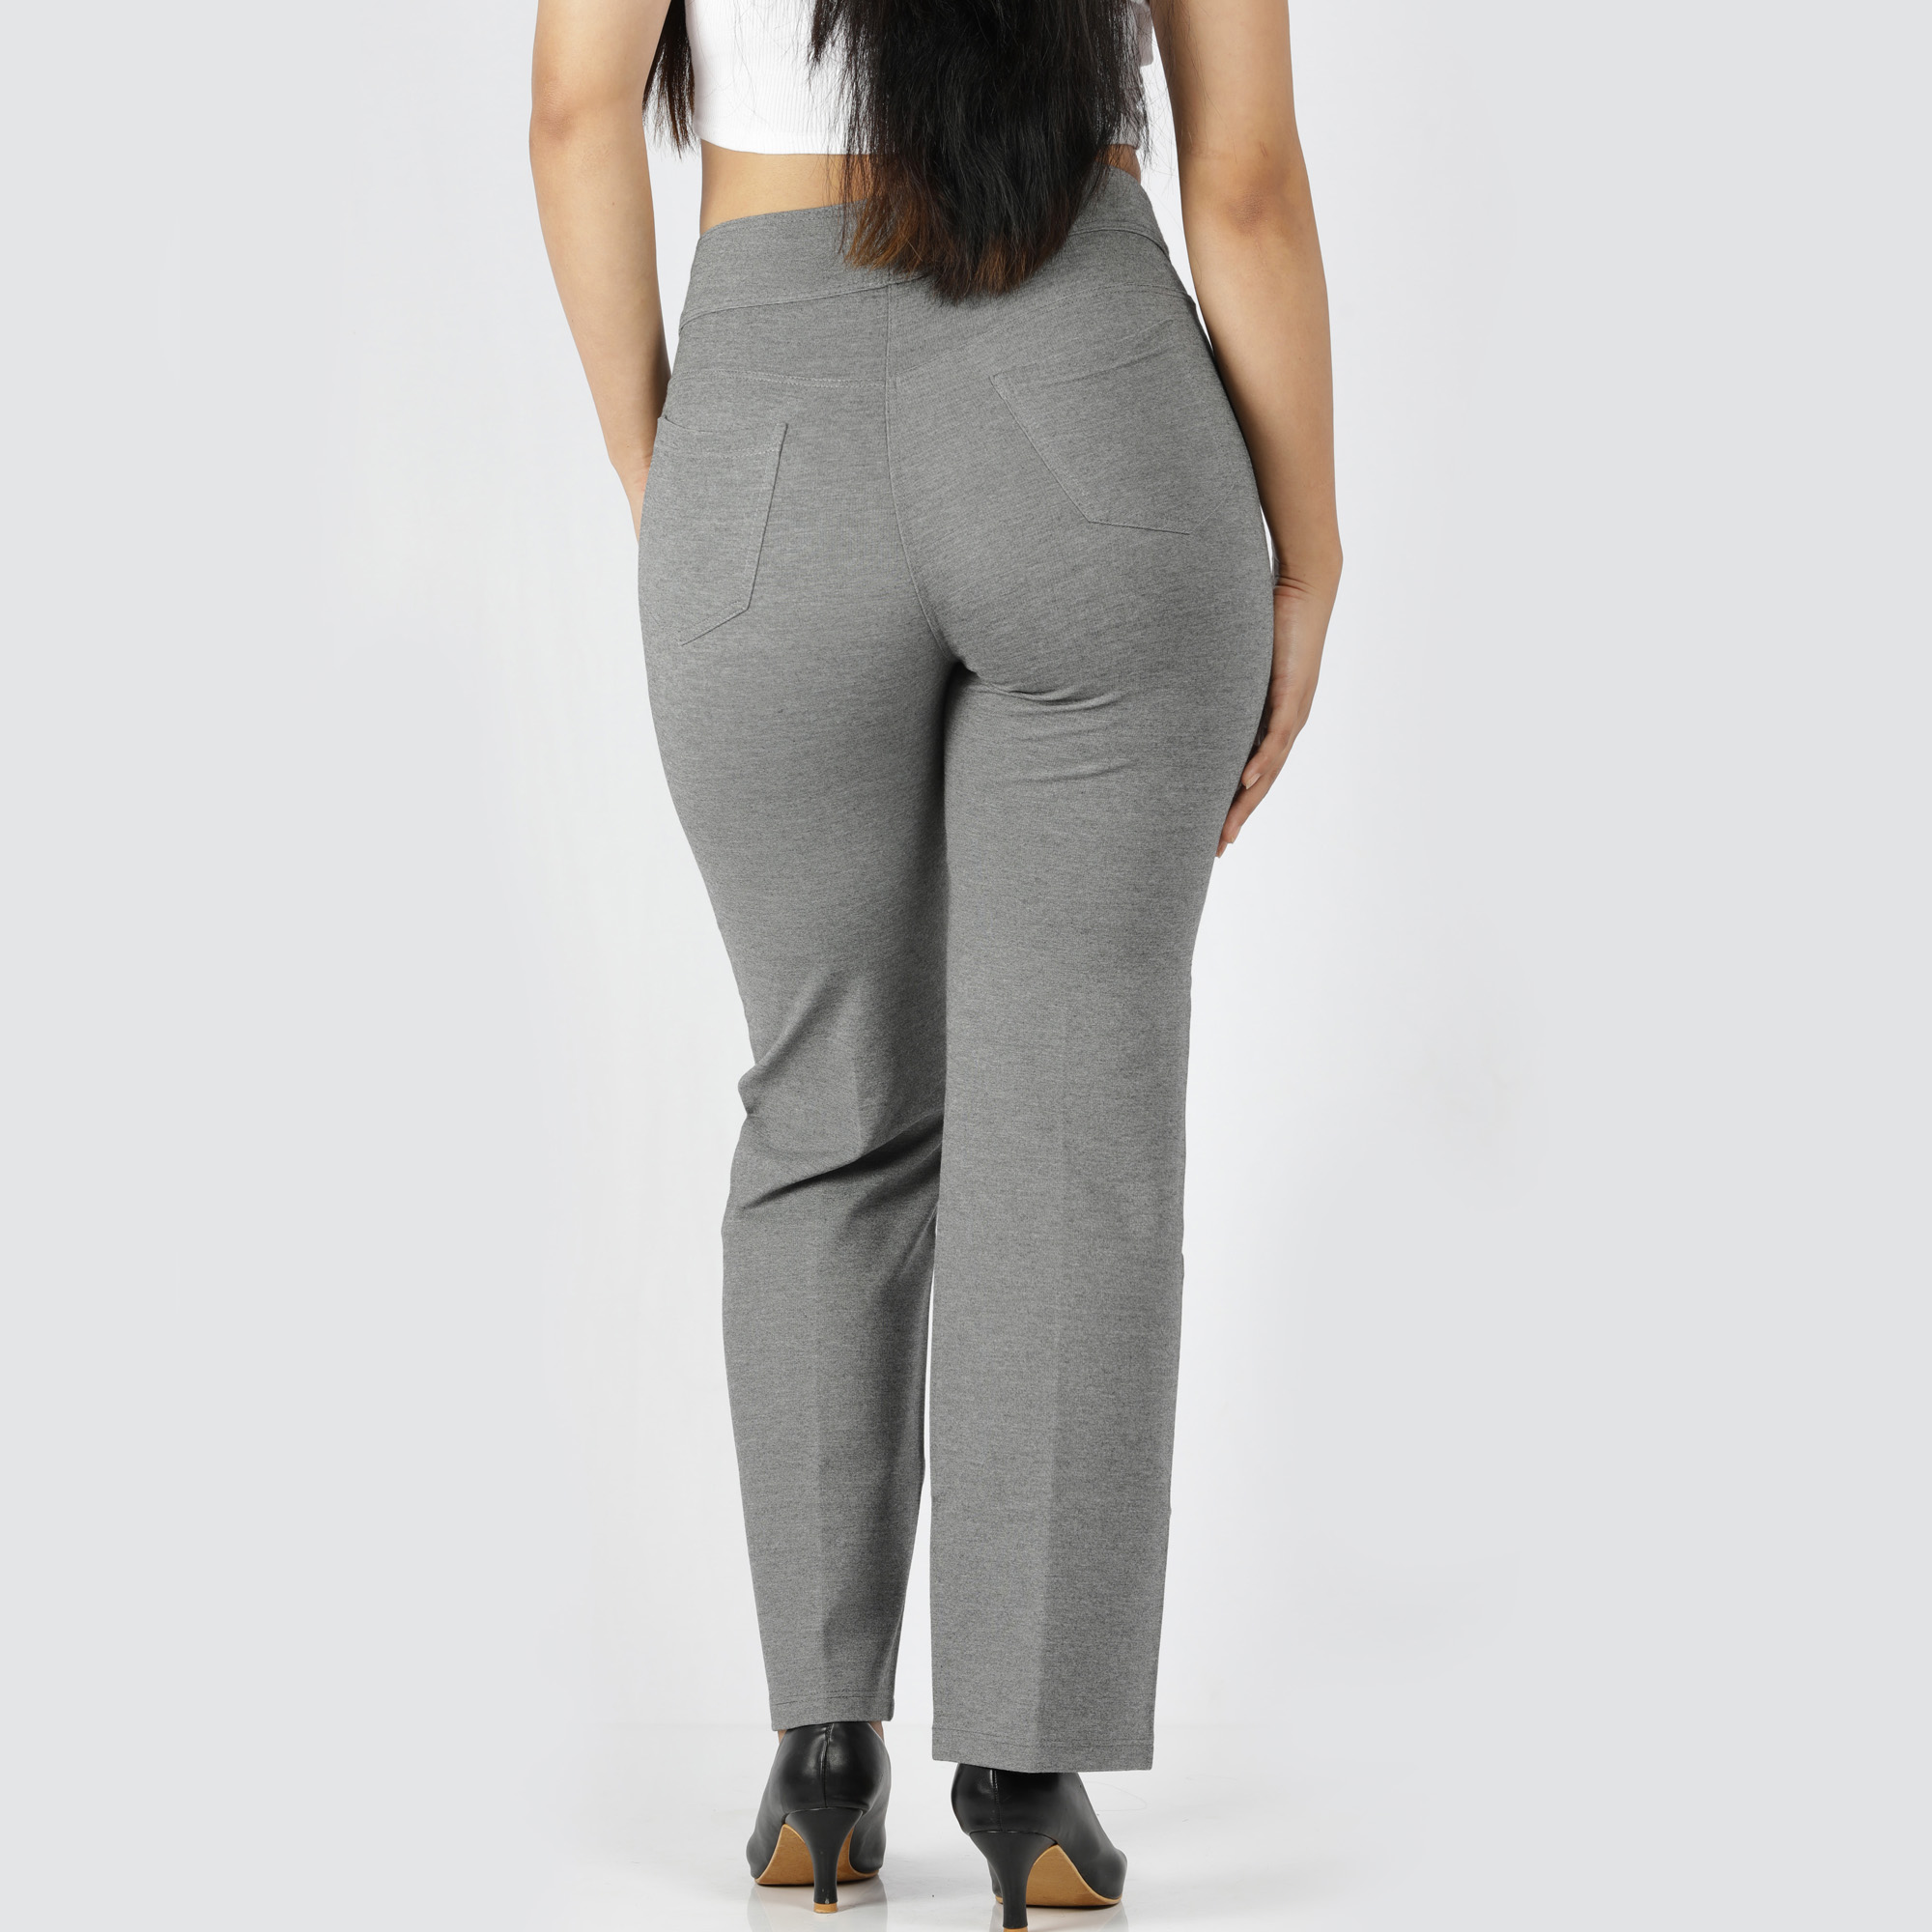 Grey pants women - Tummy tucker straight leg - 2 back pockets - Belore Slims